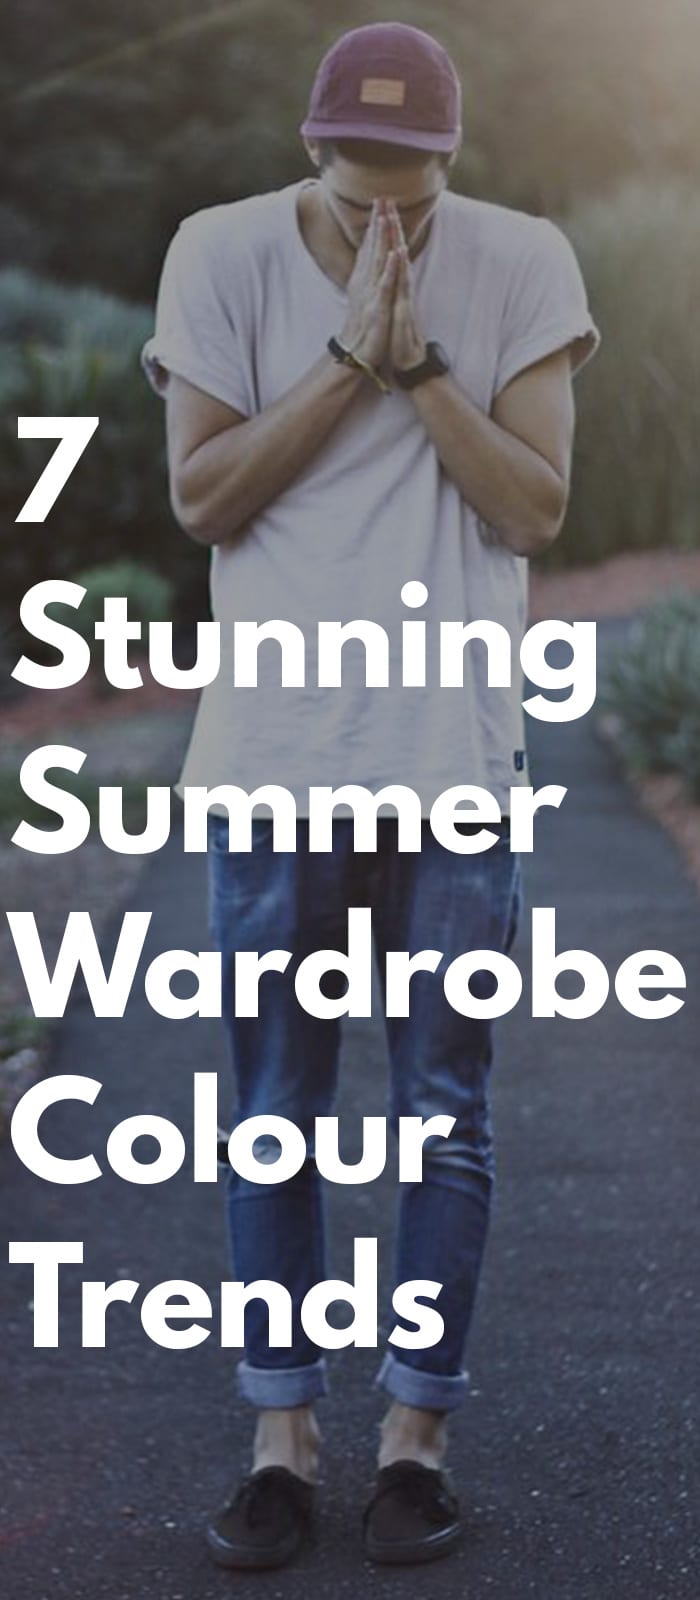 7 Stunning Summer Wardrobe Colour Trends in 2018